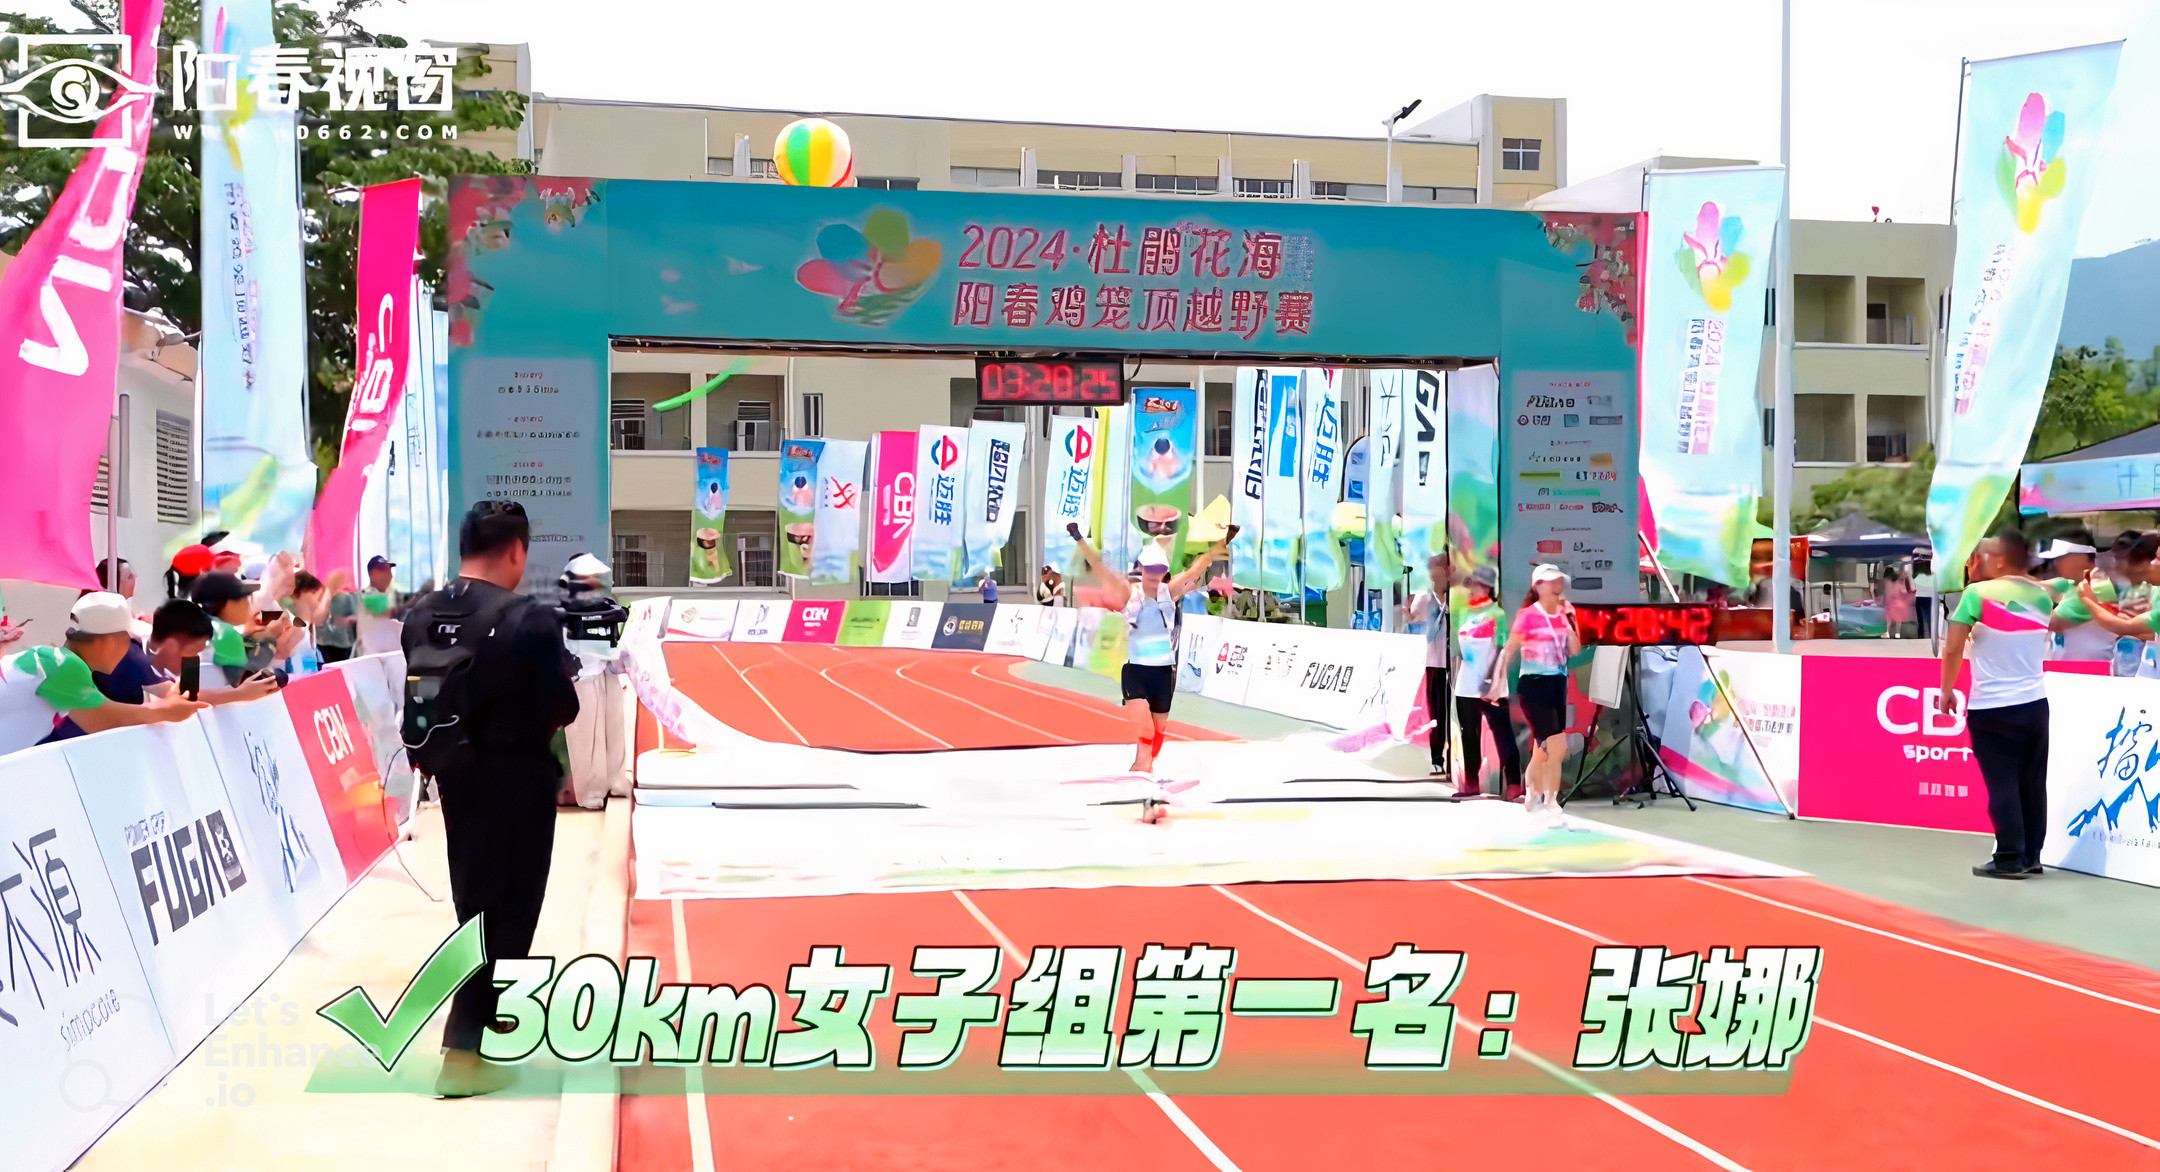 GDTV's live coverage of the Yangchun Jilongding Azalea Trail Race powered by TVU live solutions